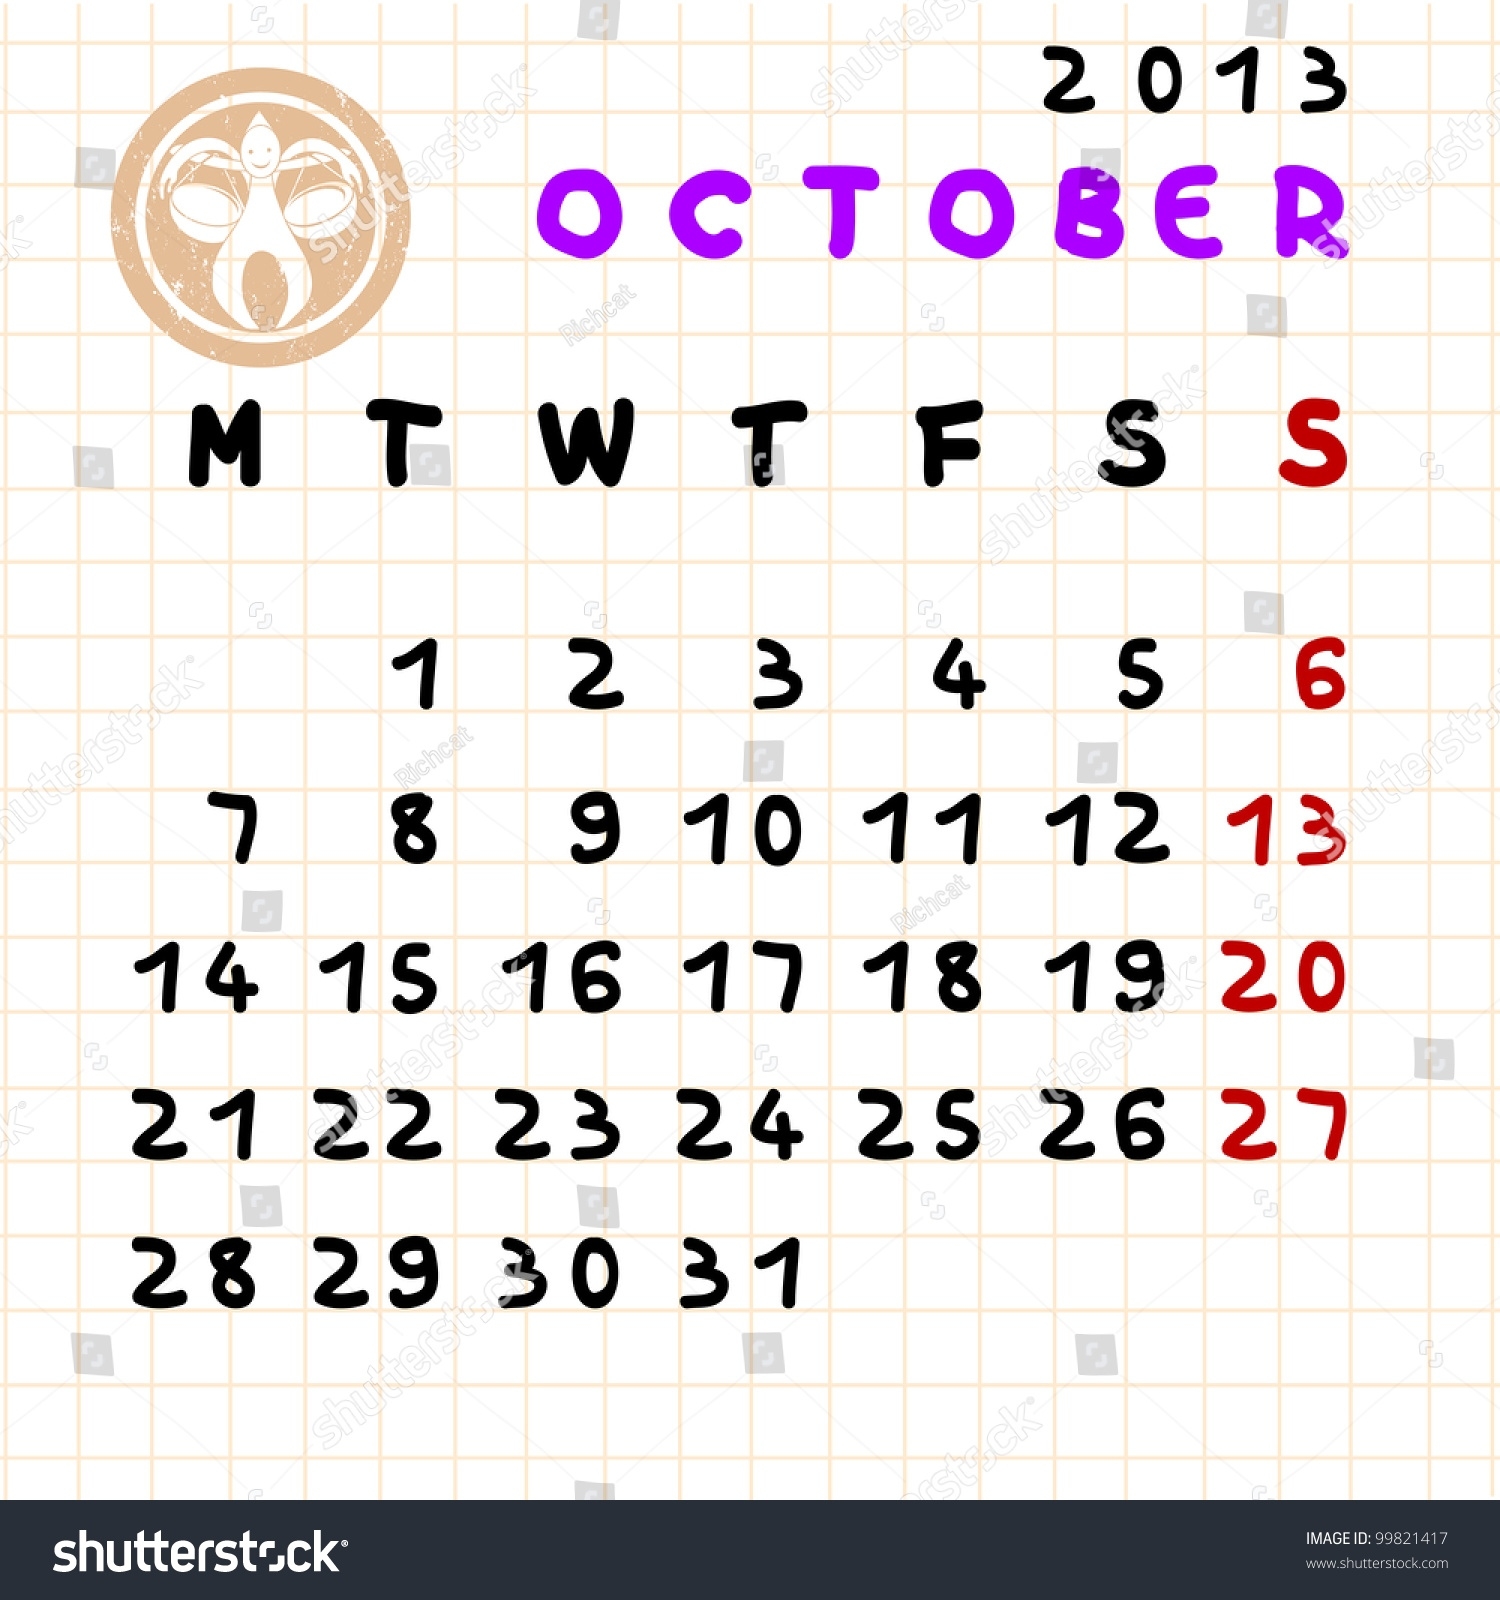 Royalty Free Stock Illustration Of 2013 Monthly Calendar October Zodiac Calendar For October